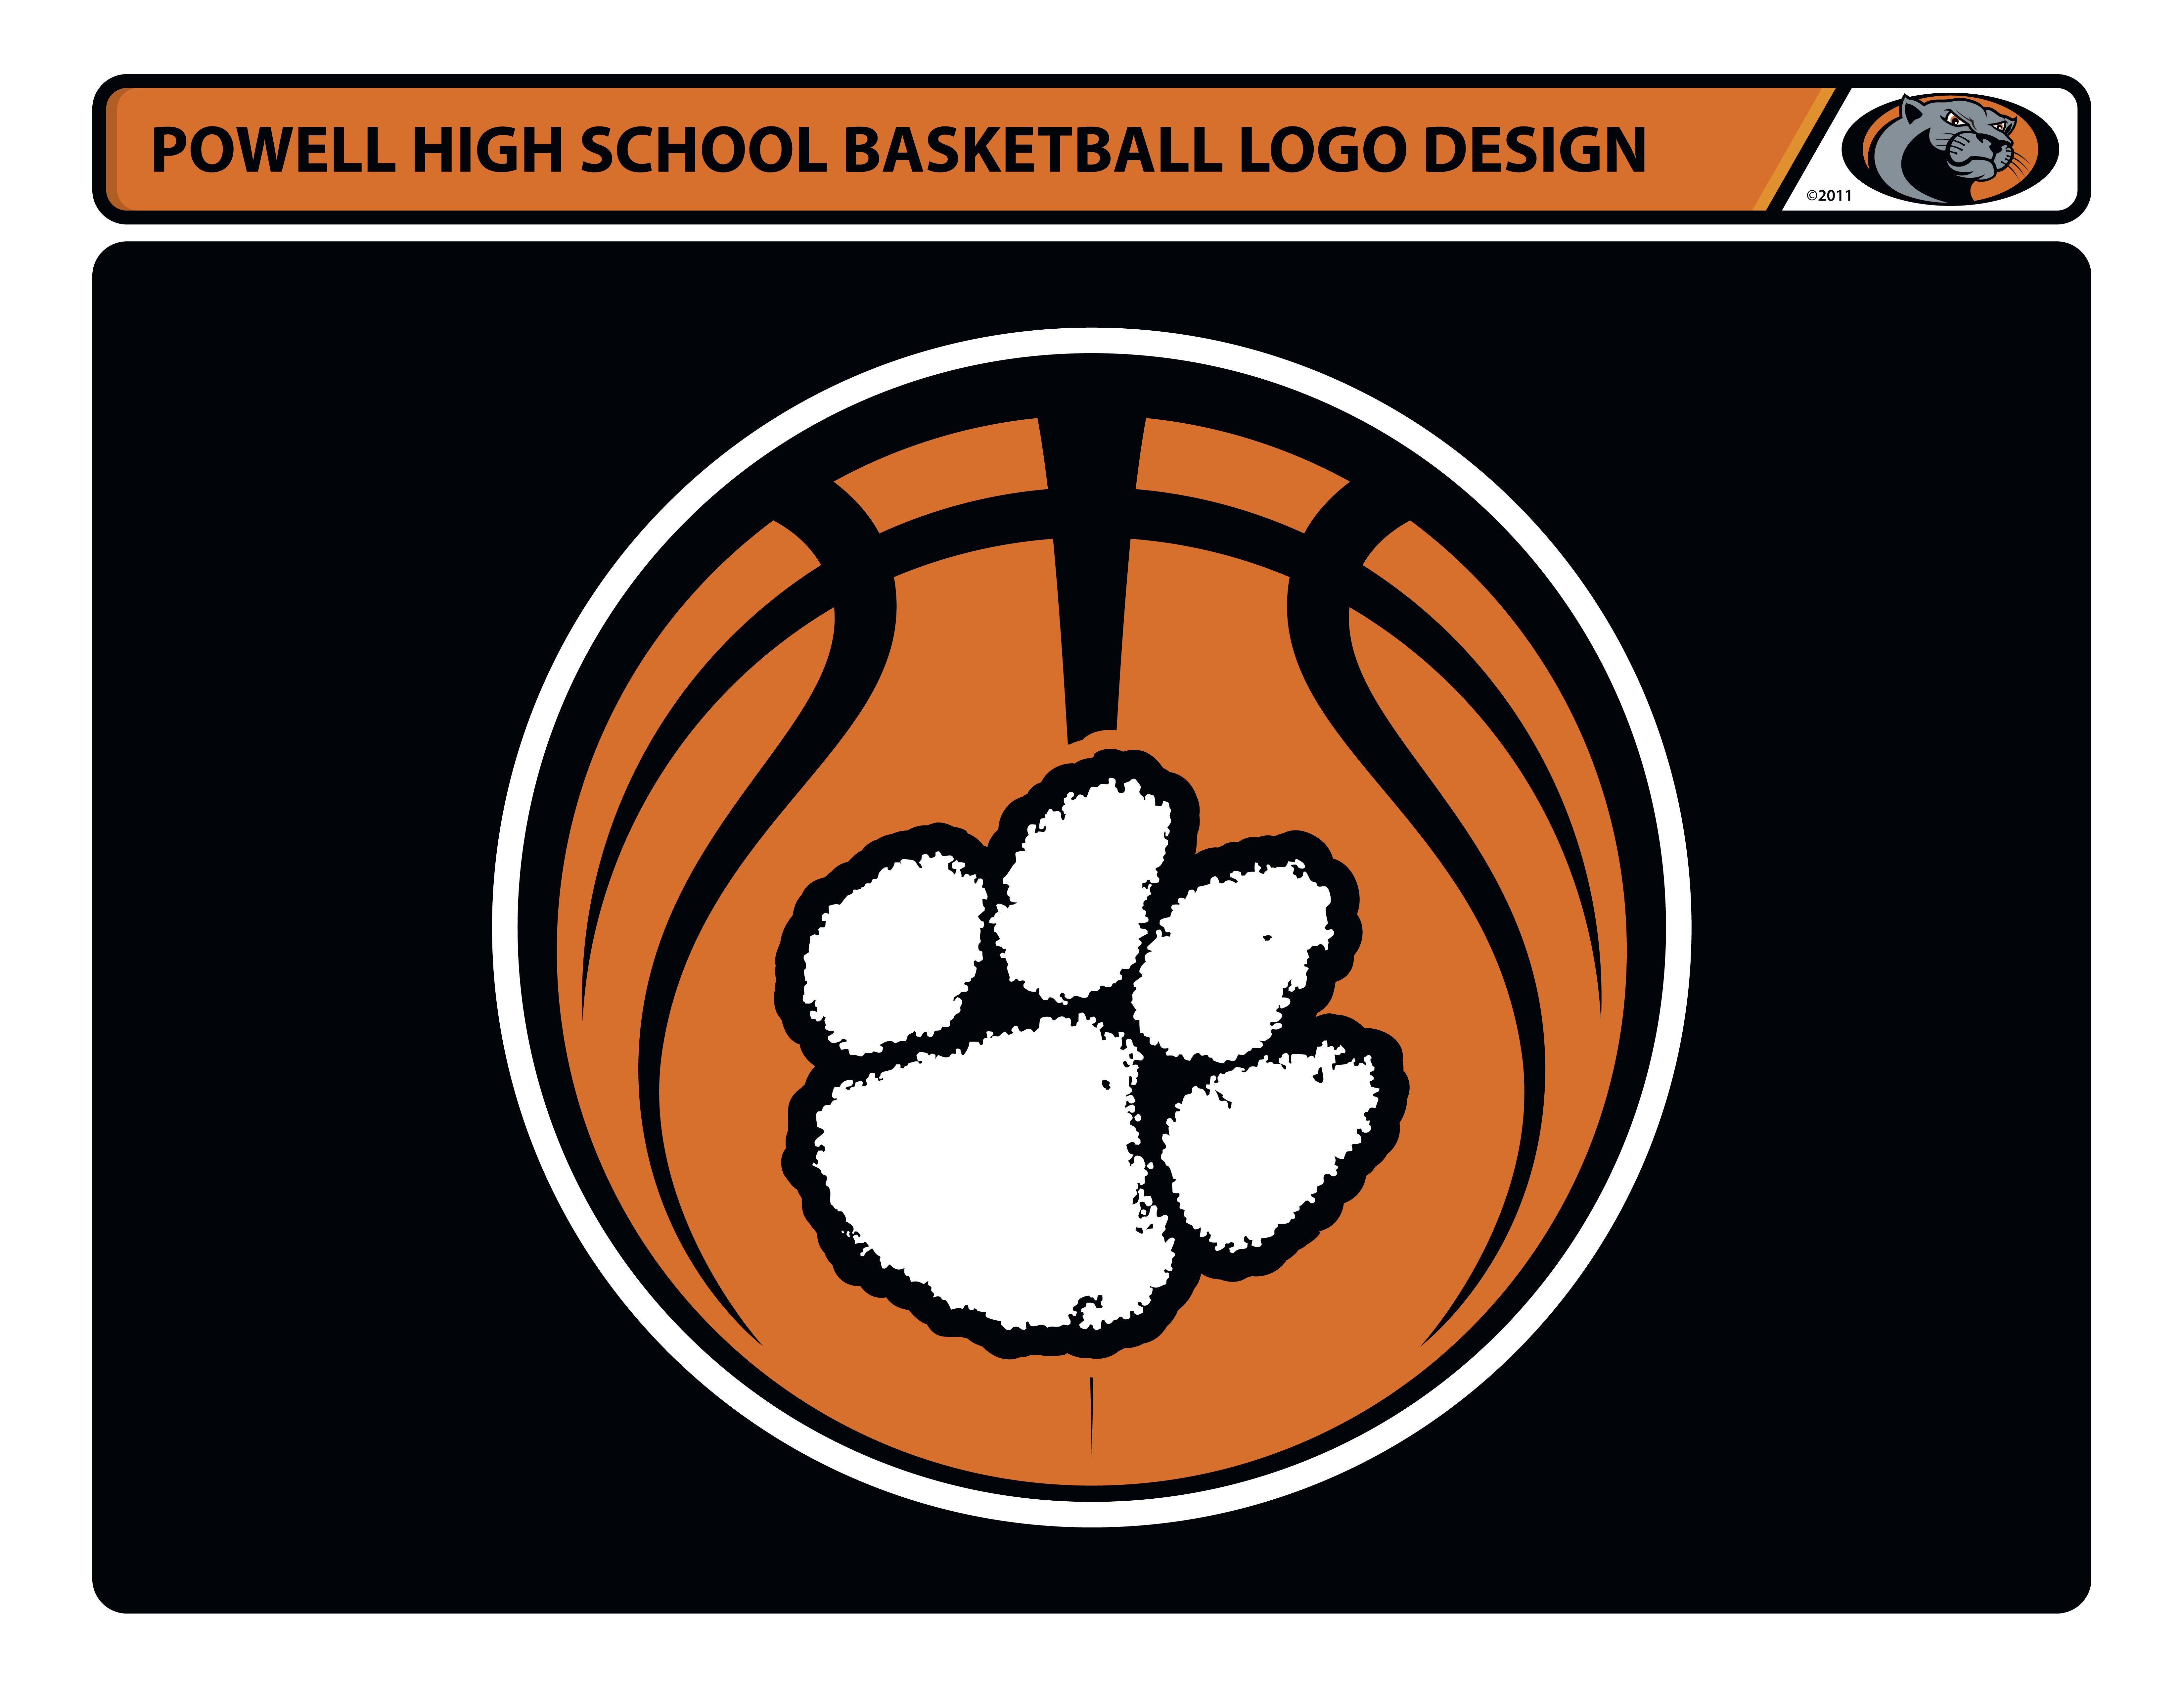 School Basketball Logo - Powell High School Basketball Logo Design